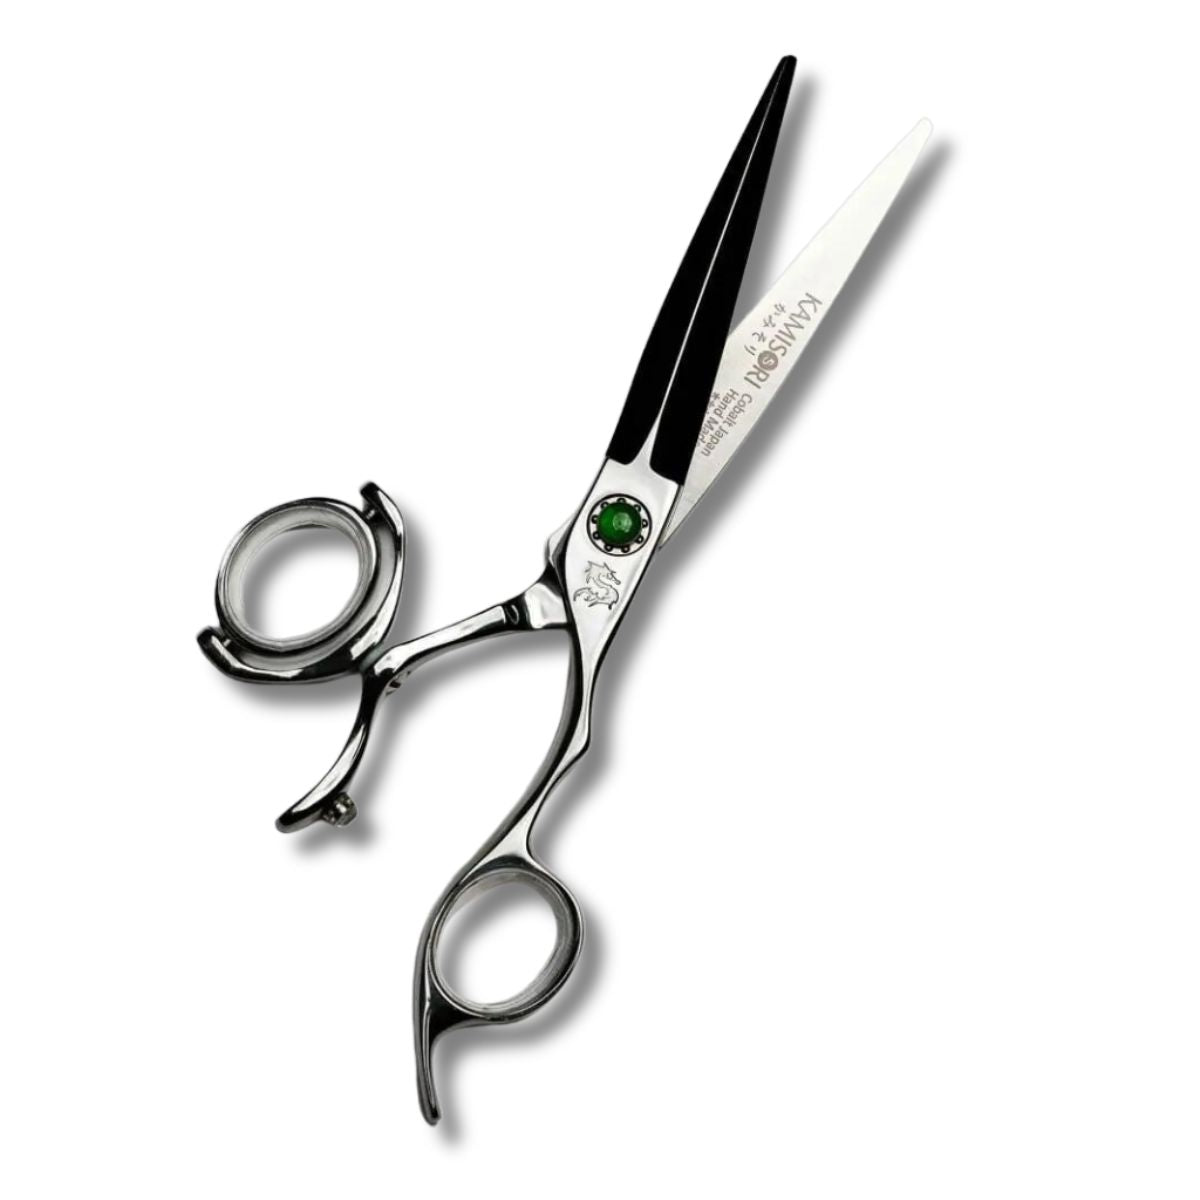 Kamisori Revolver Professional Haircutting Scissors